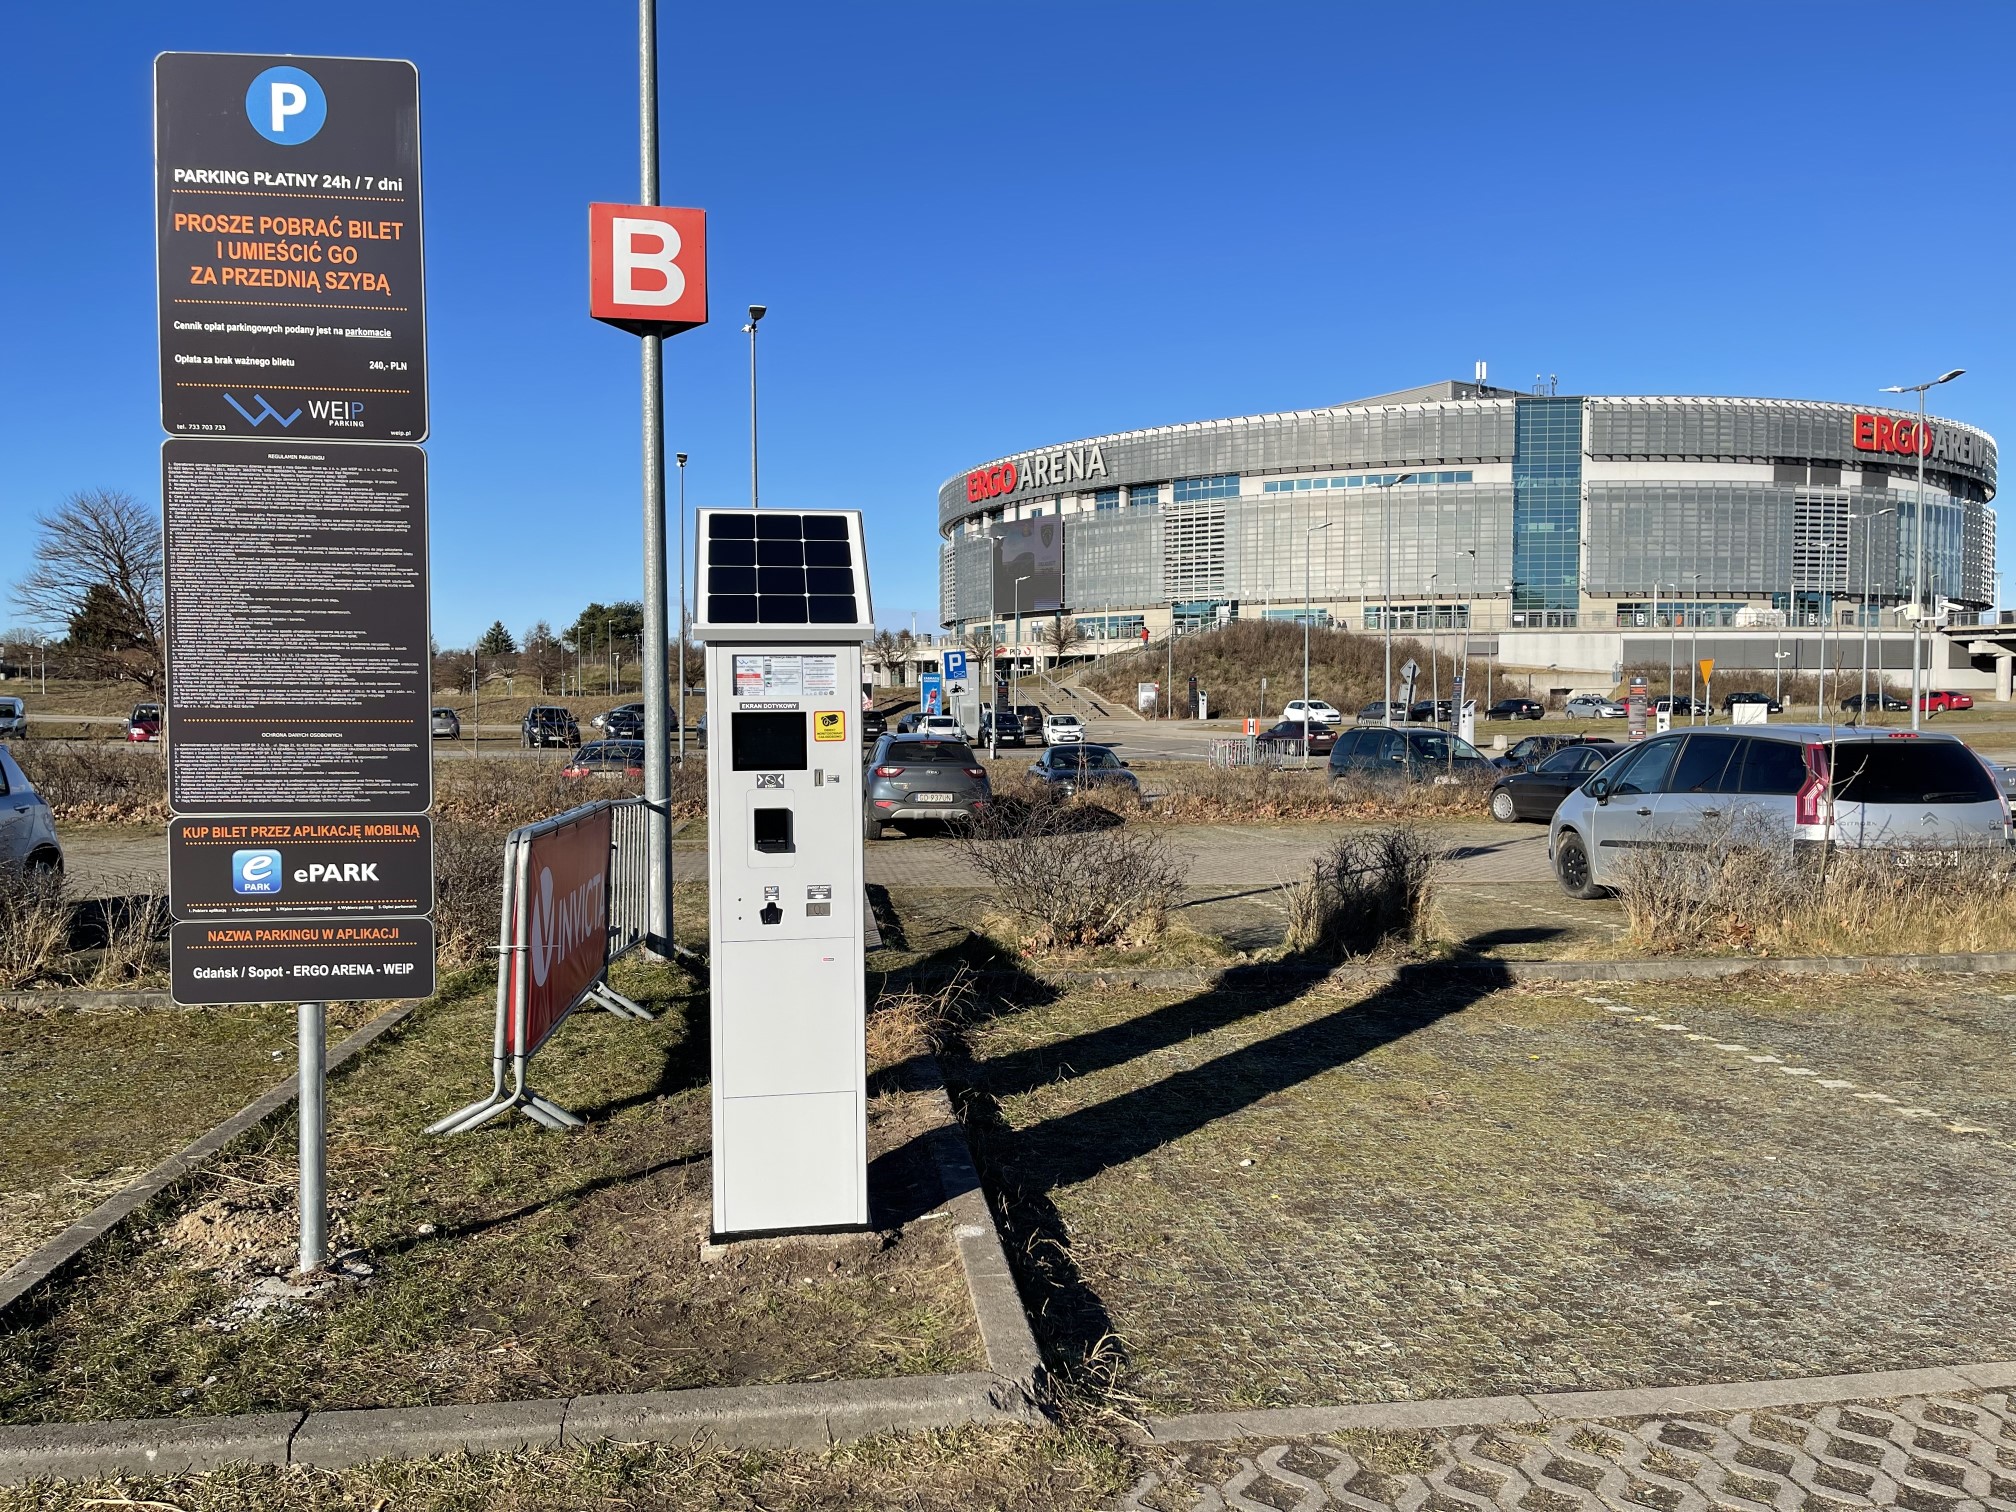 Citea Parking Machine for the Ergo Arena in Gdańsk